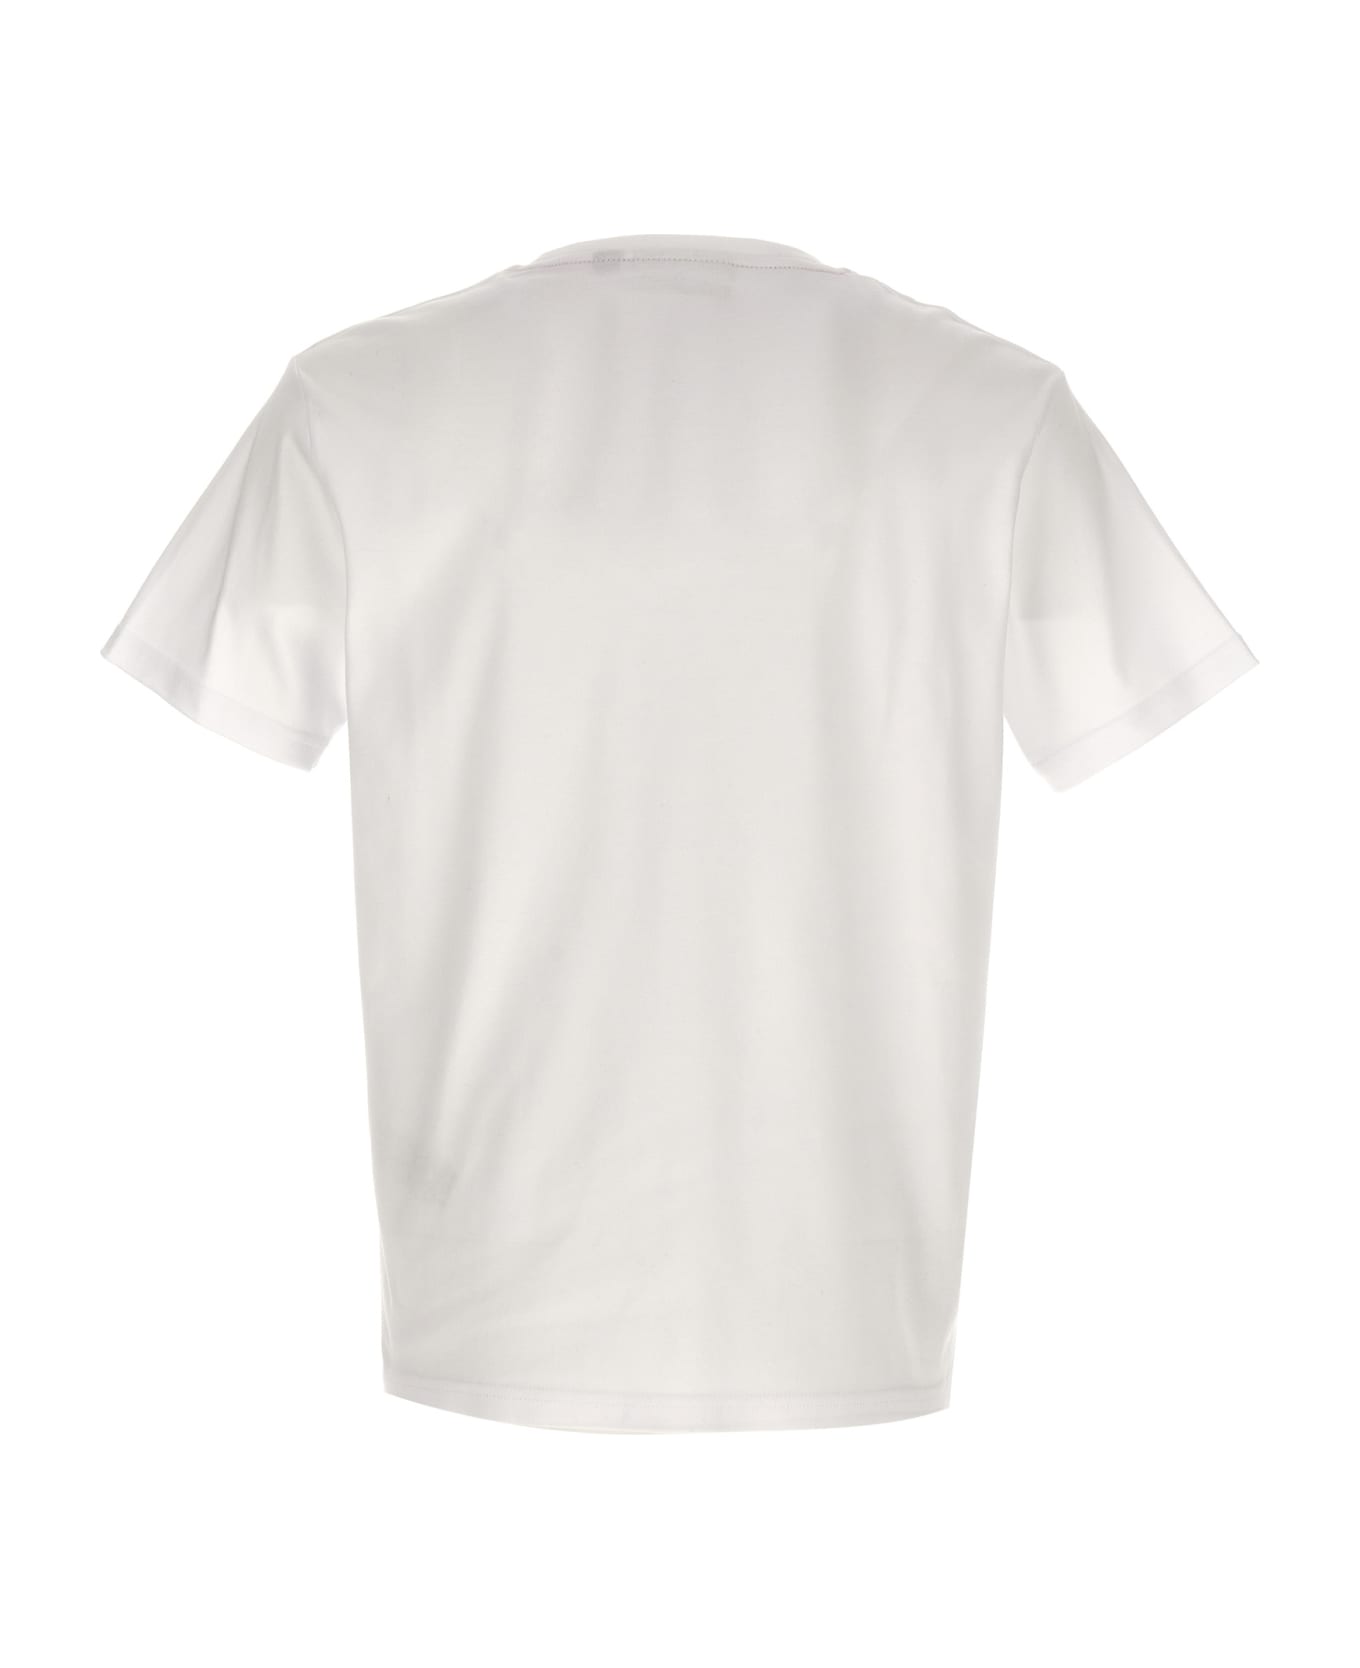 GCDS Basic Logo T-shirt - Bianco Ottico シャツ